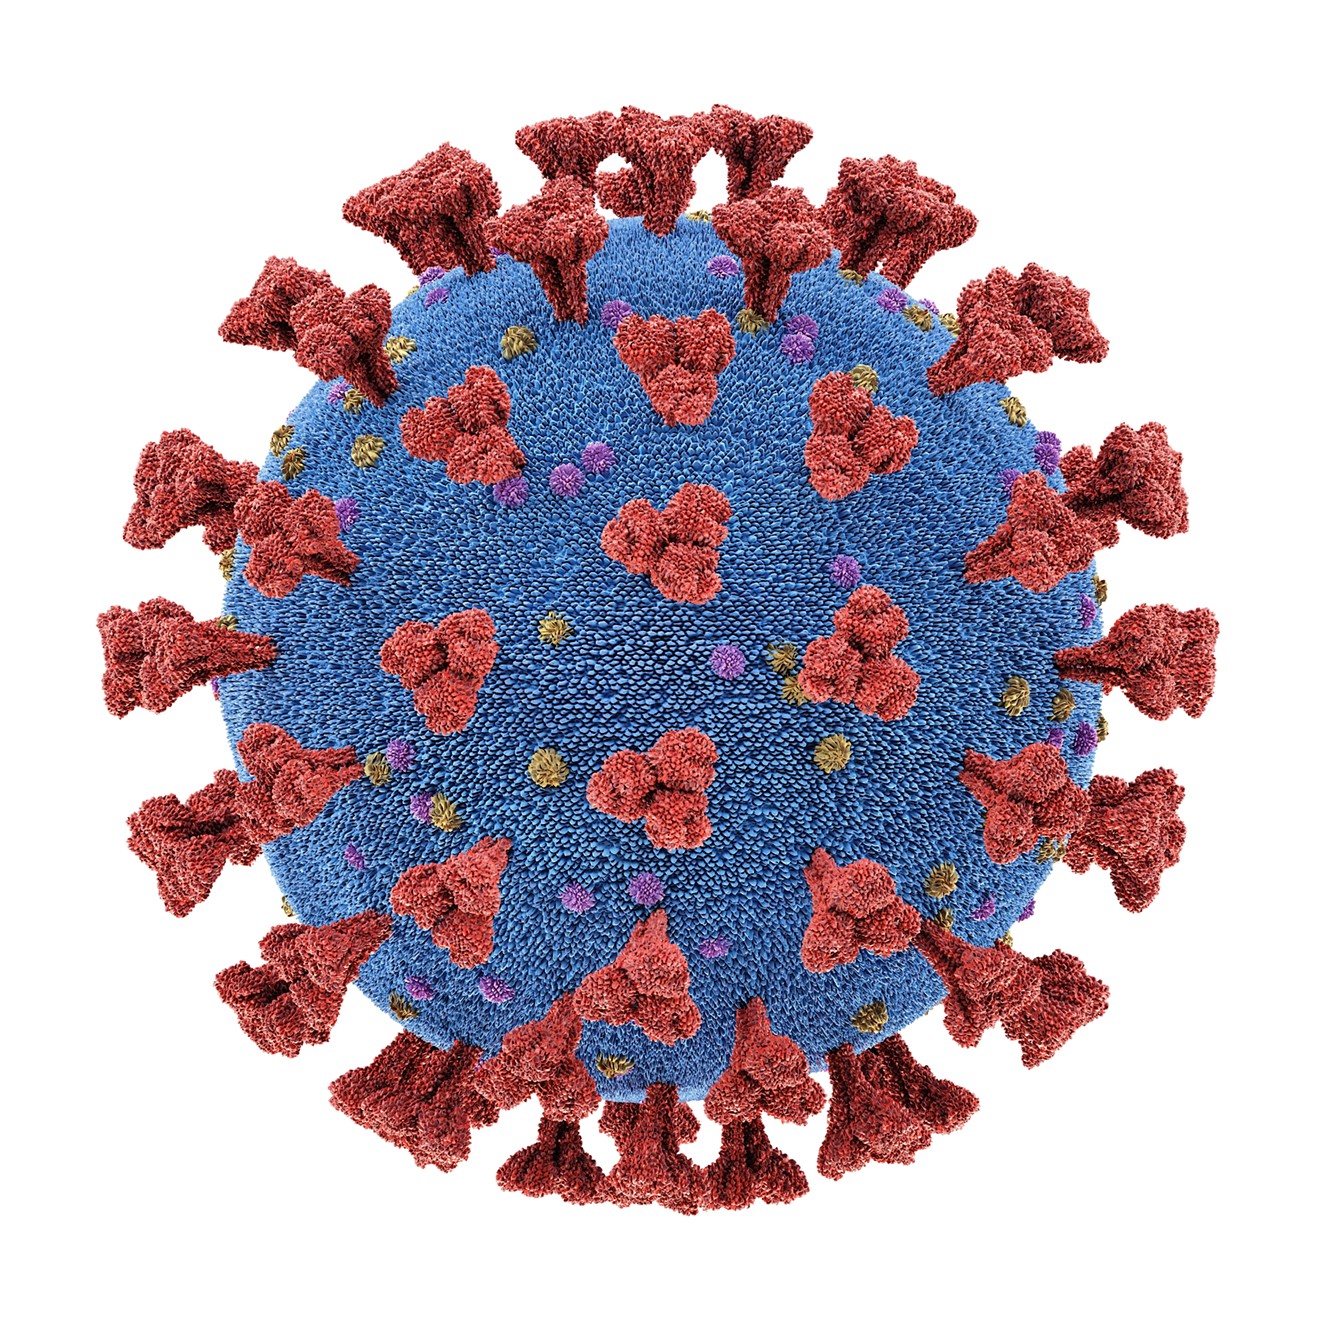 The novel coronavirus pandemic continues in Dallas County.